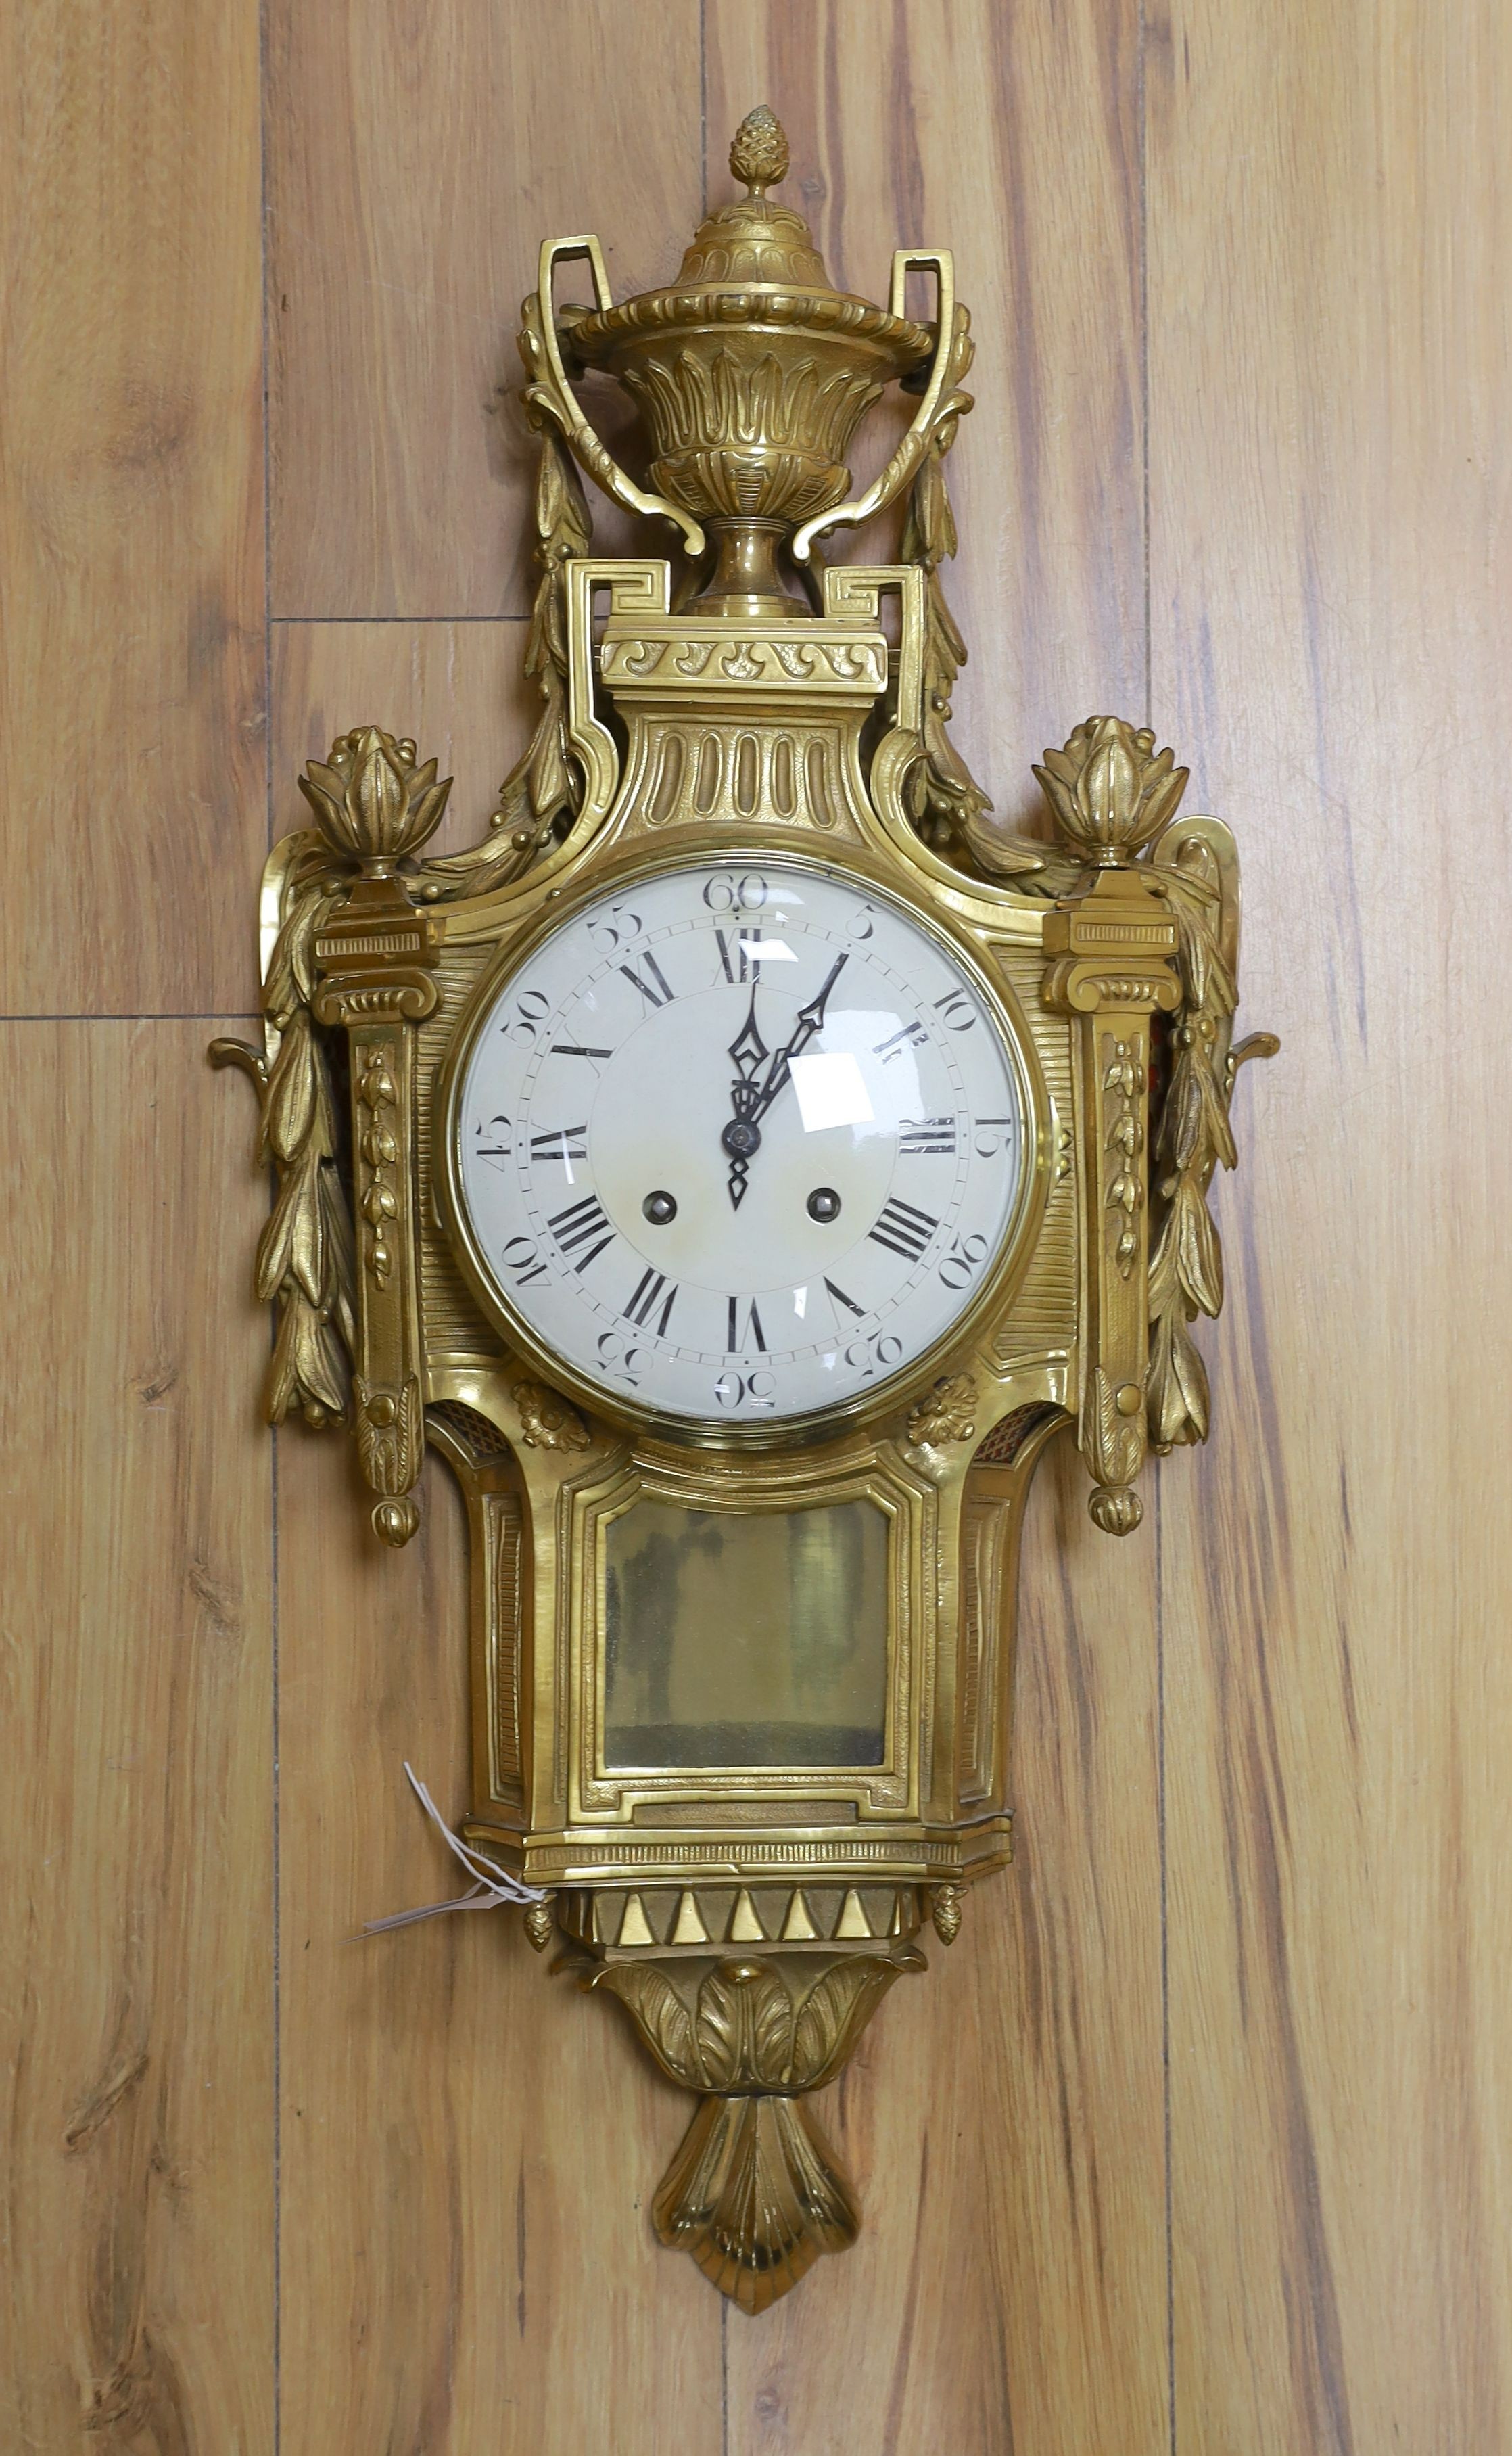 A decorative brass Cartel wall clock - 80cm tall